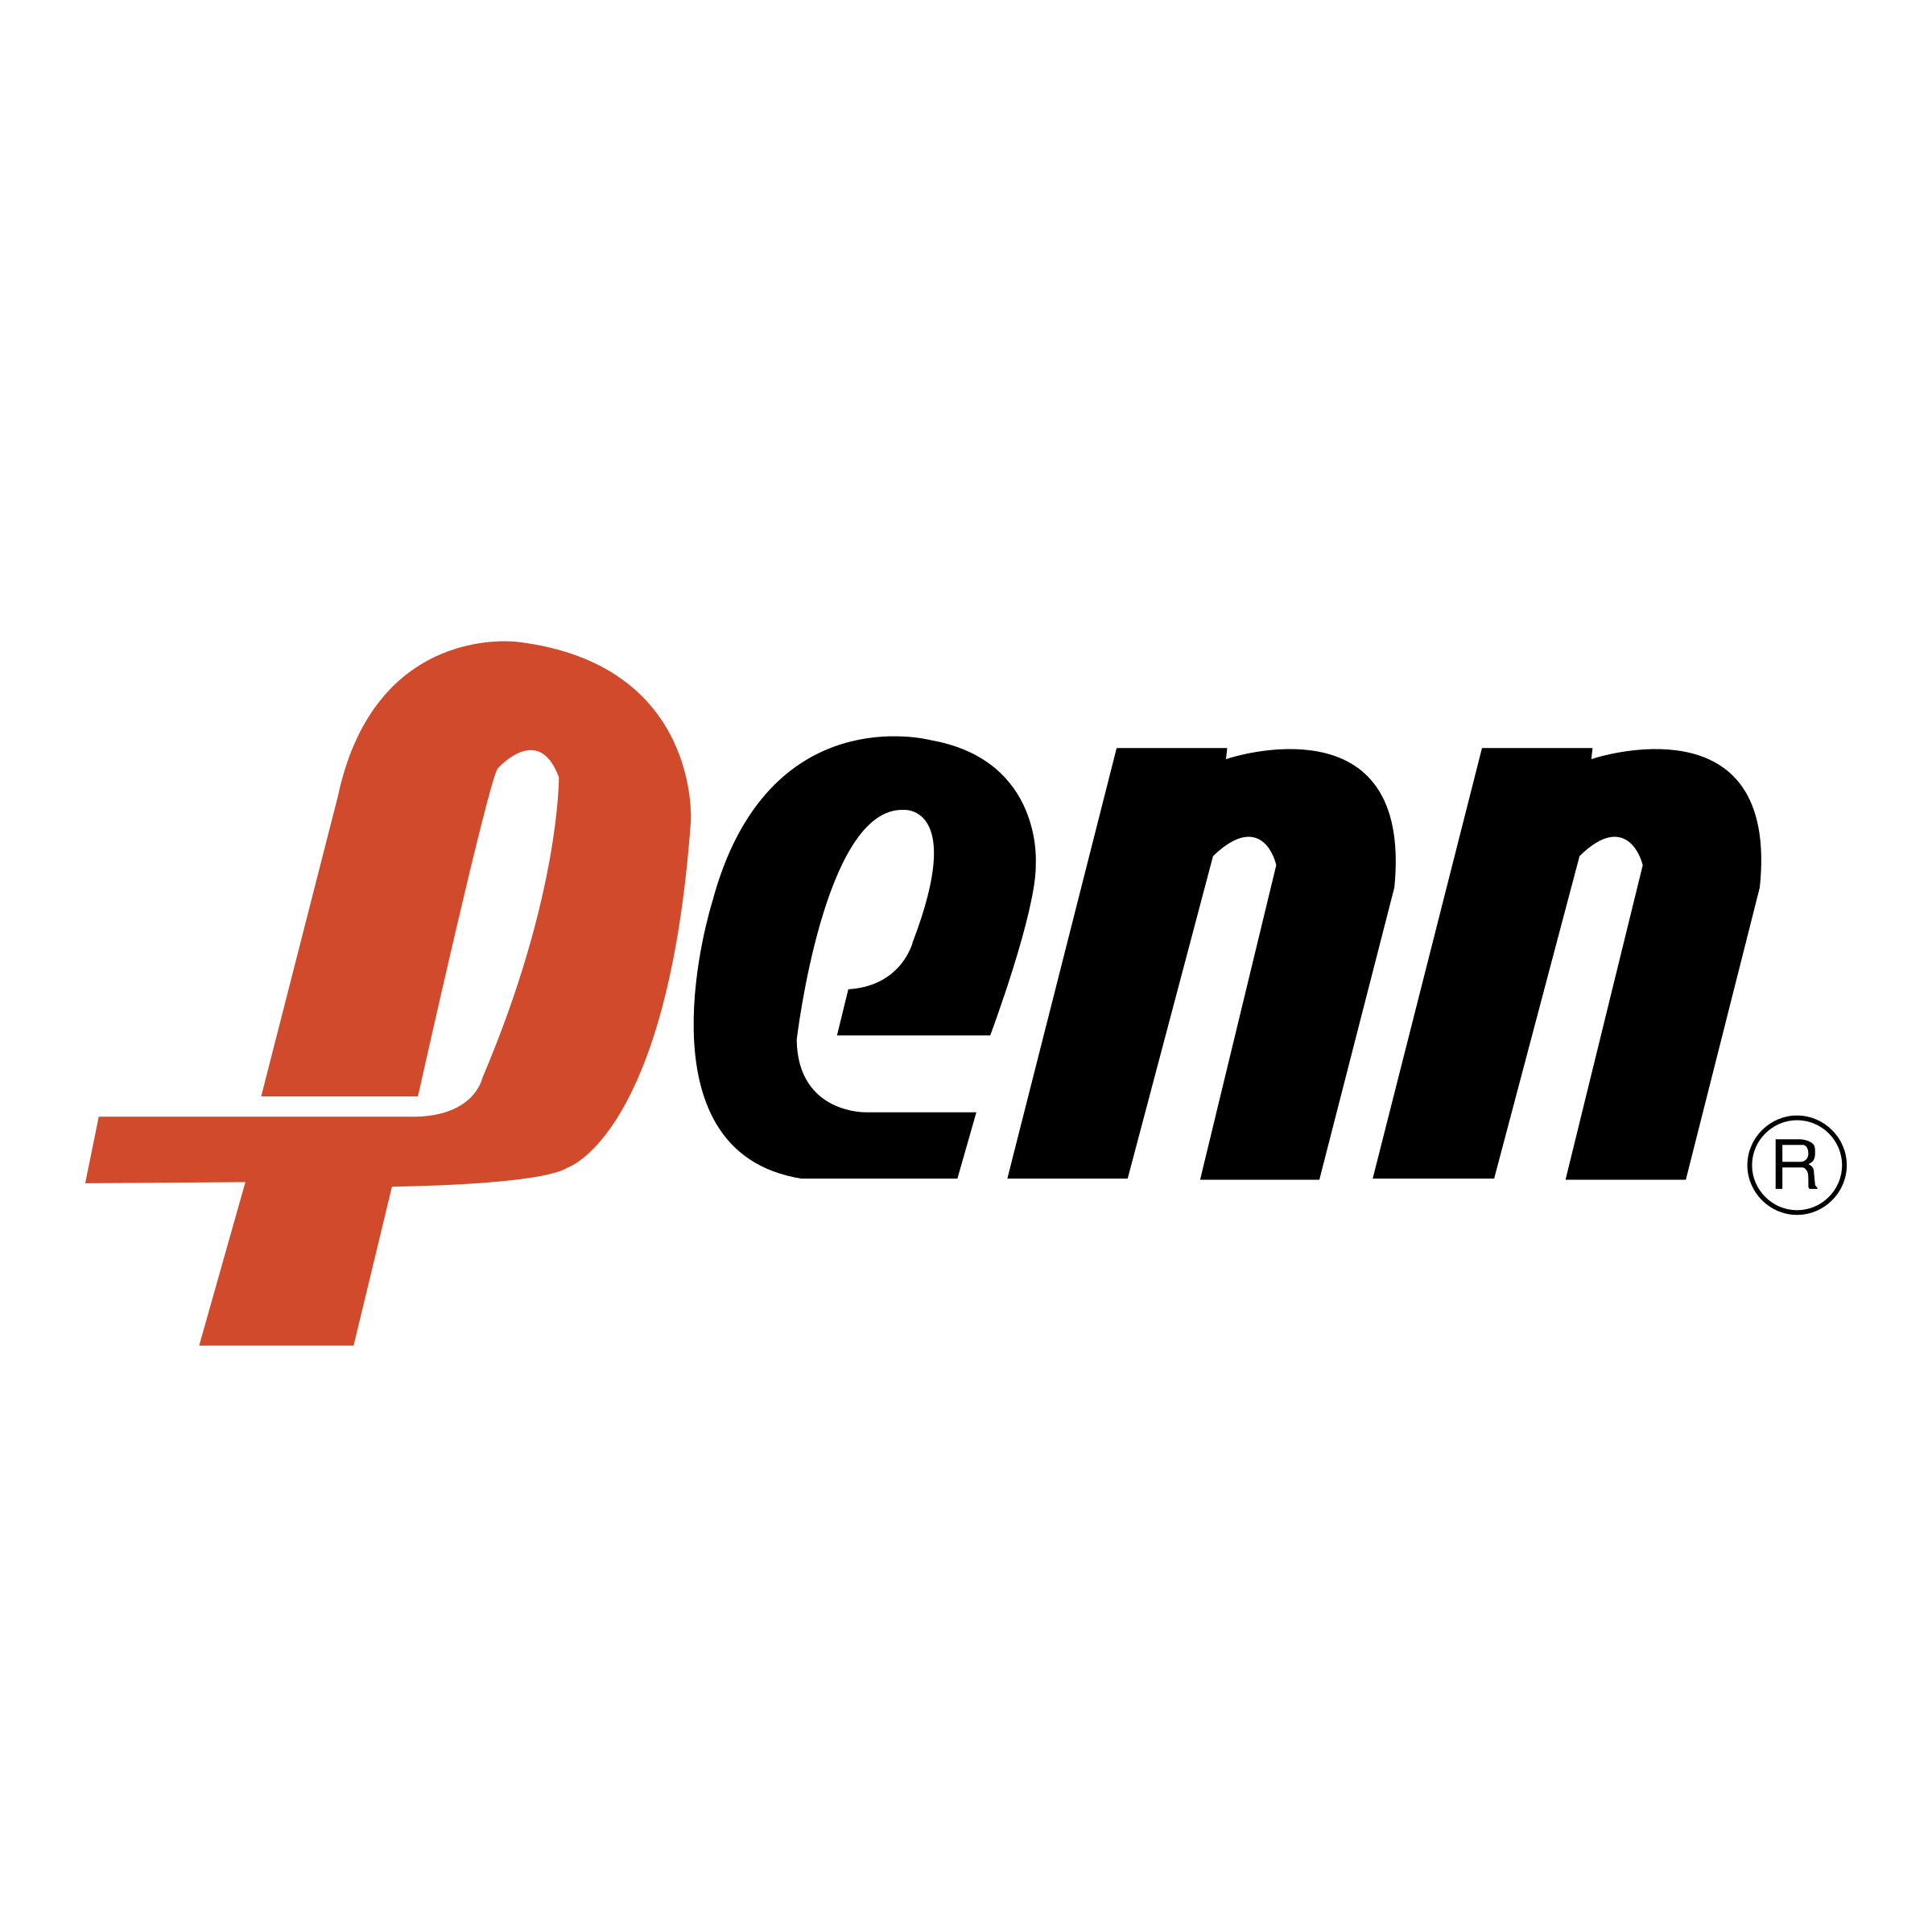 Penn Logo - Penn Logo PNG Transparent & SVG Vector